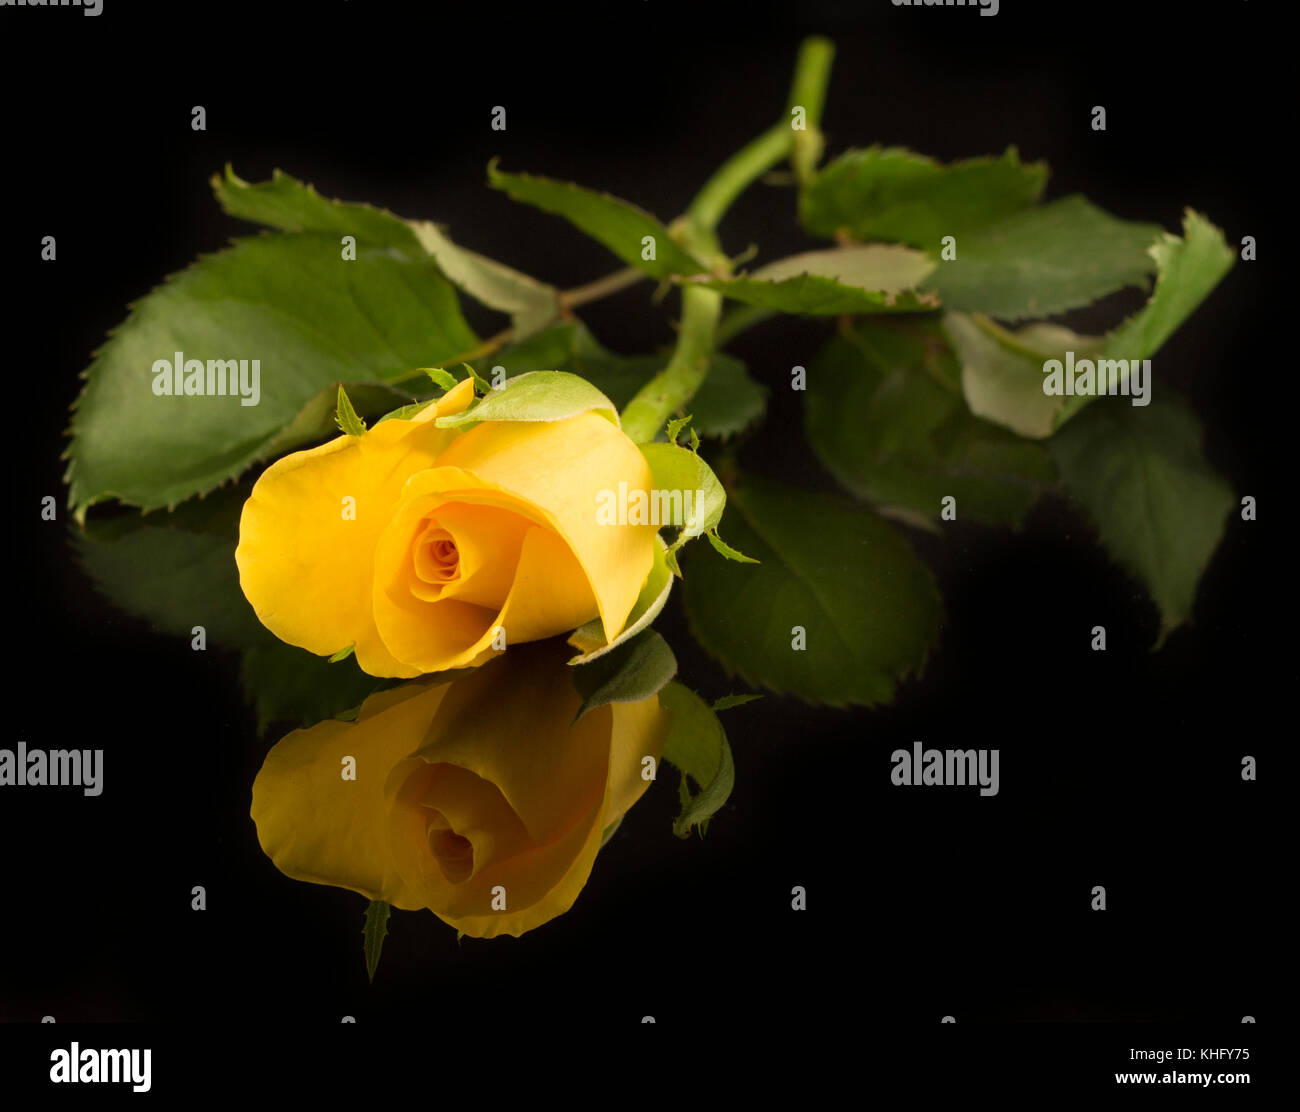 Yellow rose on black background Stock Photo - Alamy